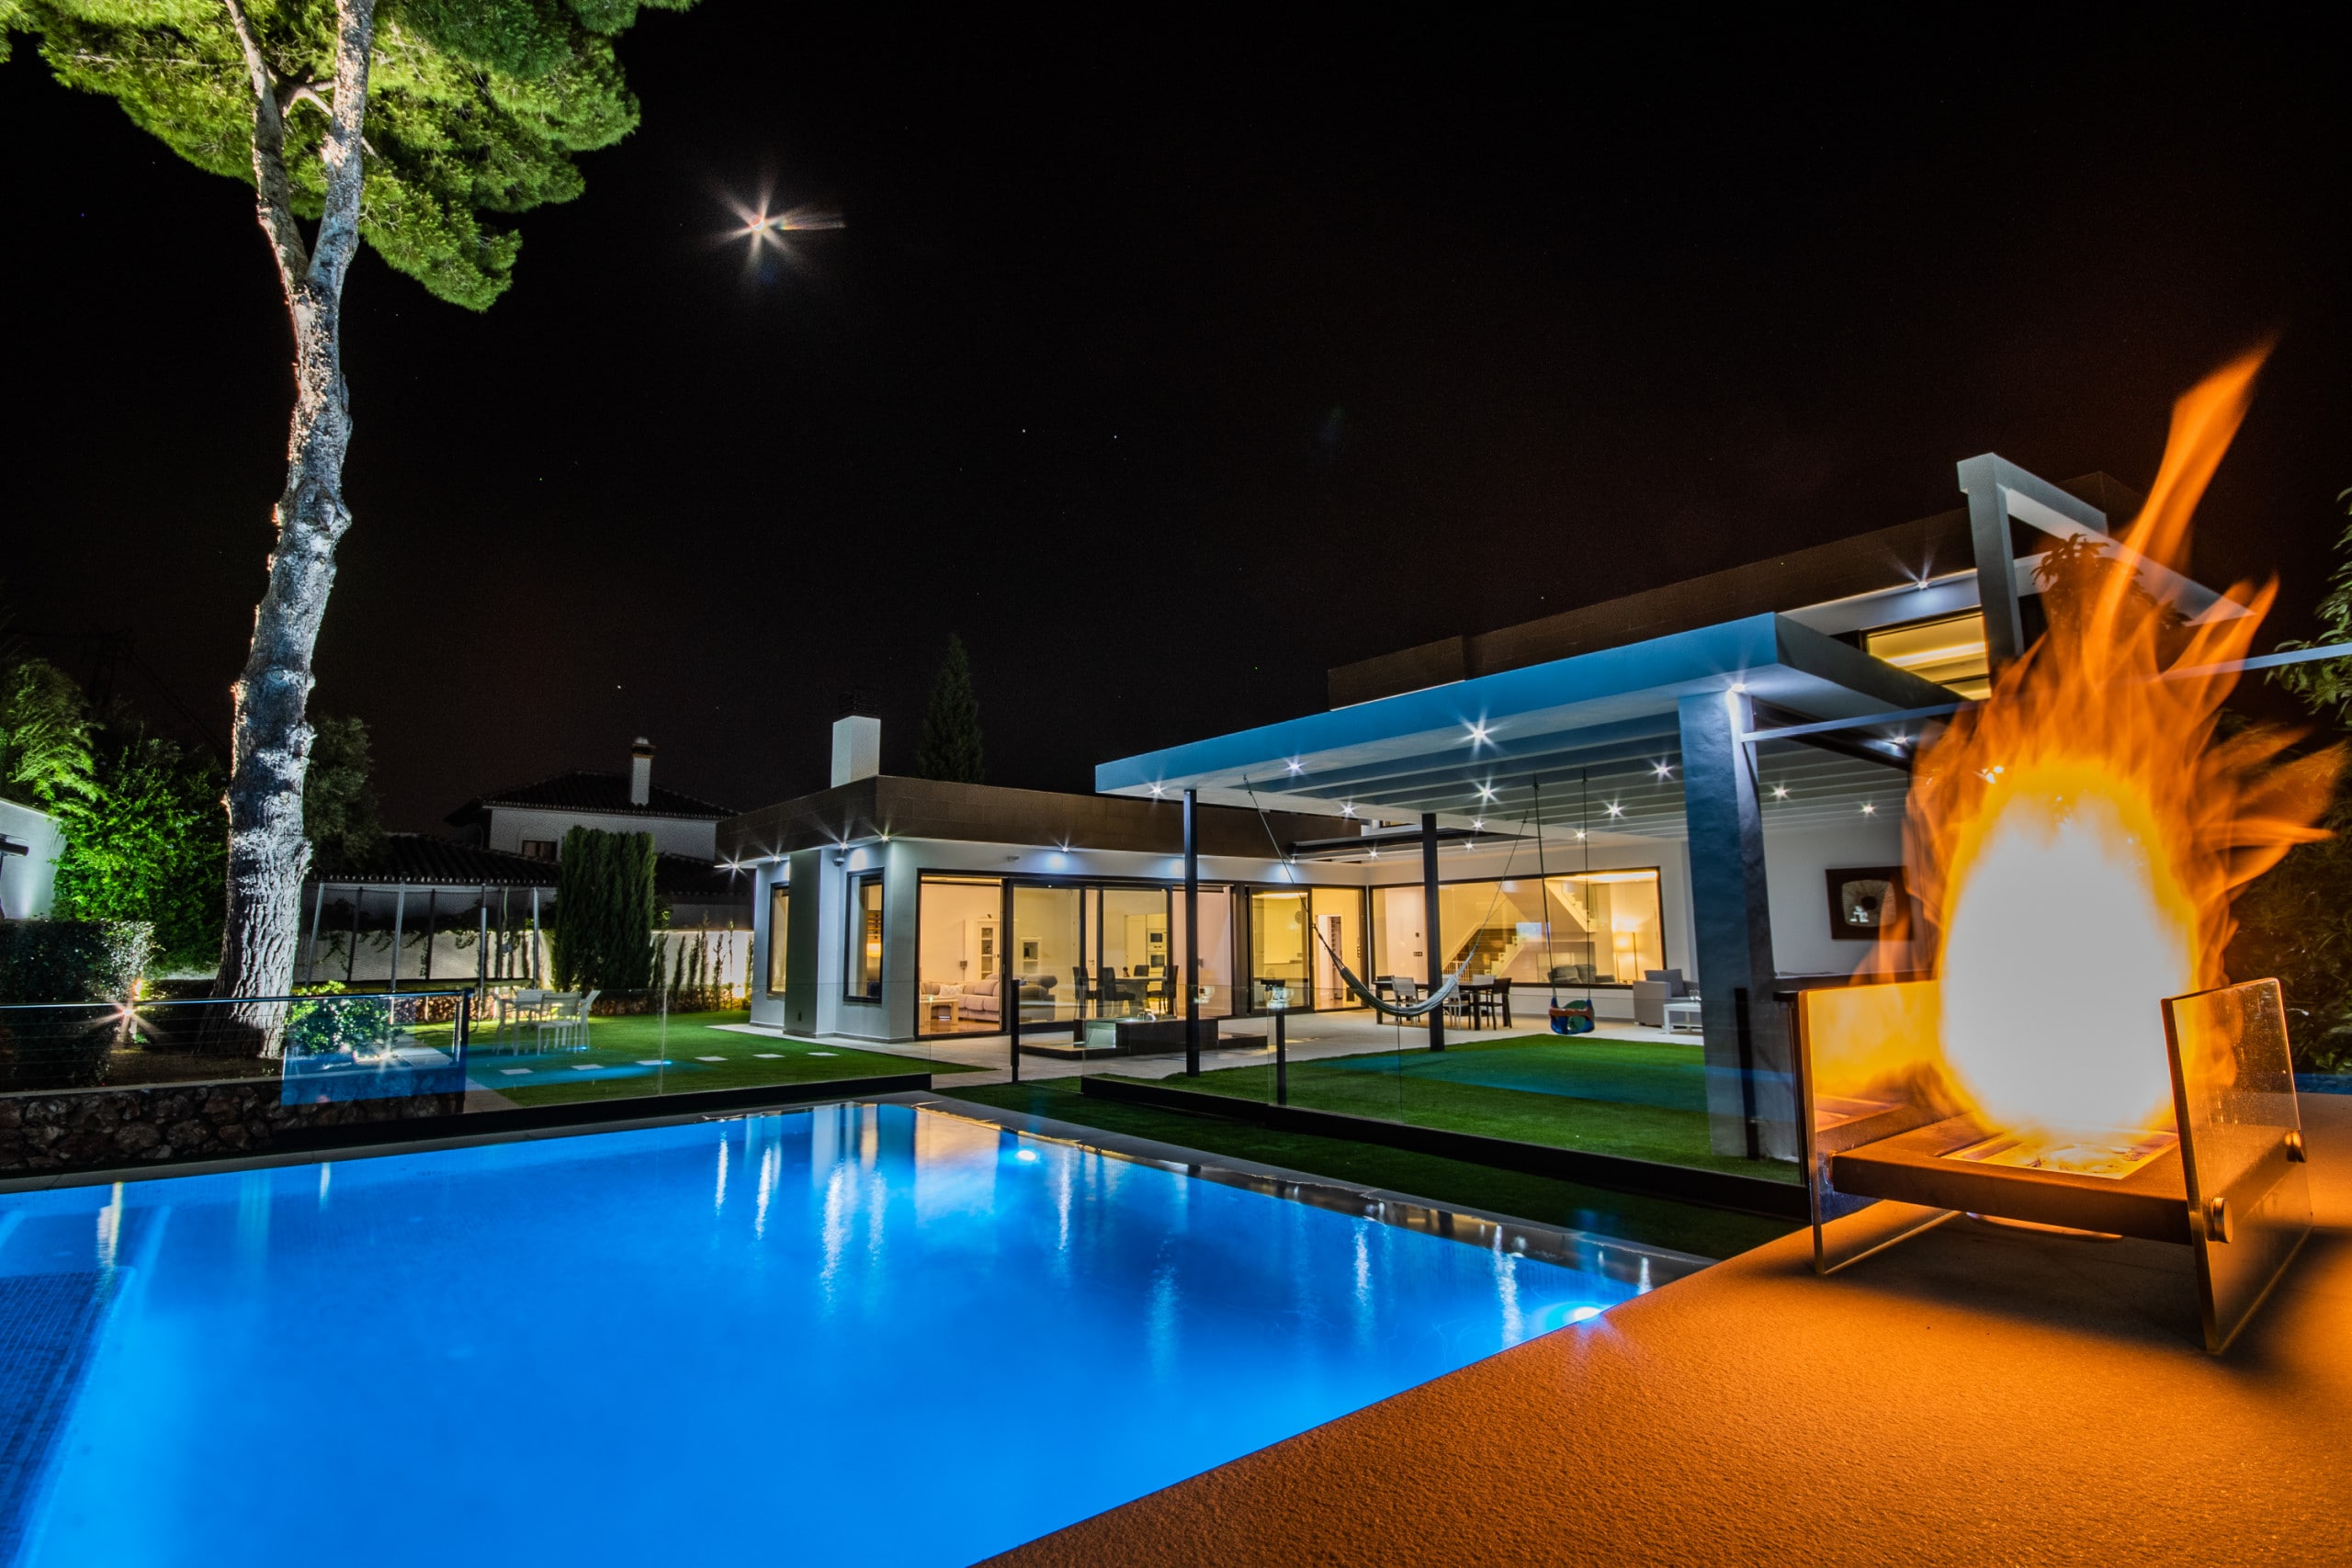 Private swimming pool at night luxury villa for 12 people in Alhaurín el Grande, Málaga